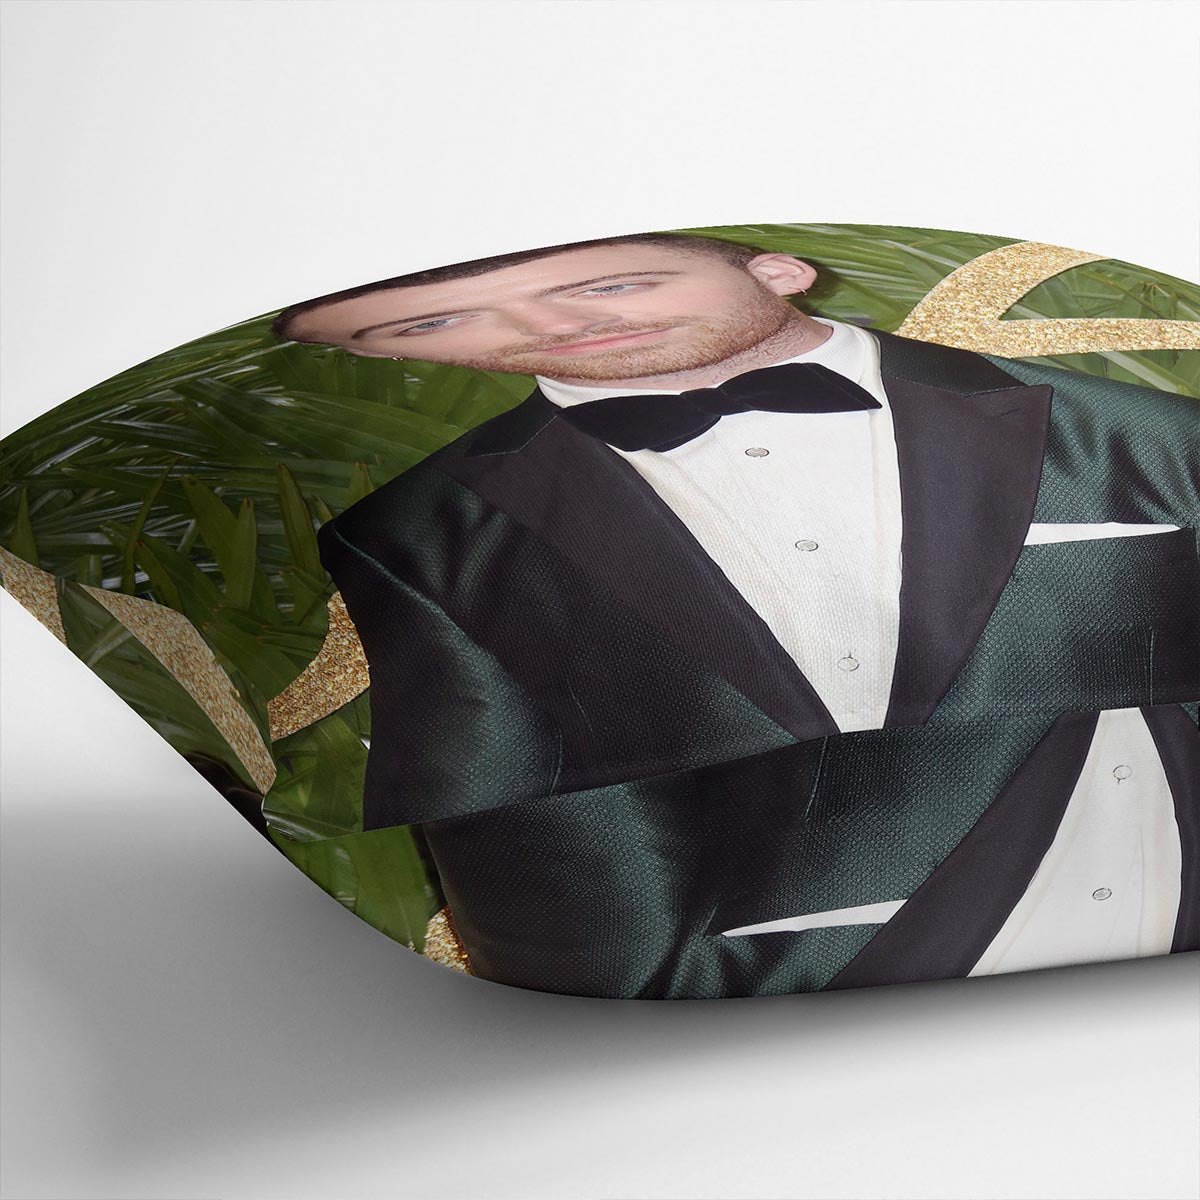 Sam Smith in a tux Cushion